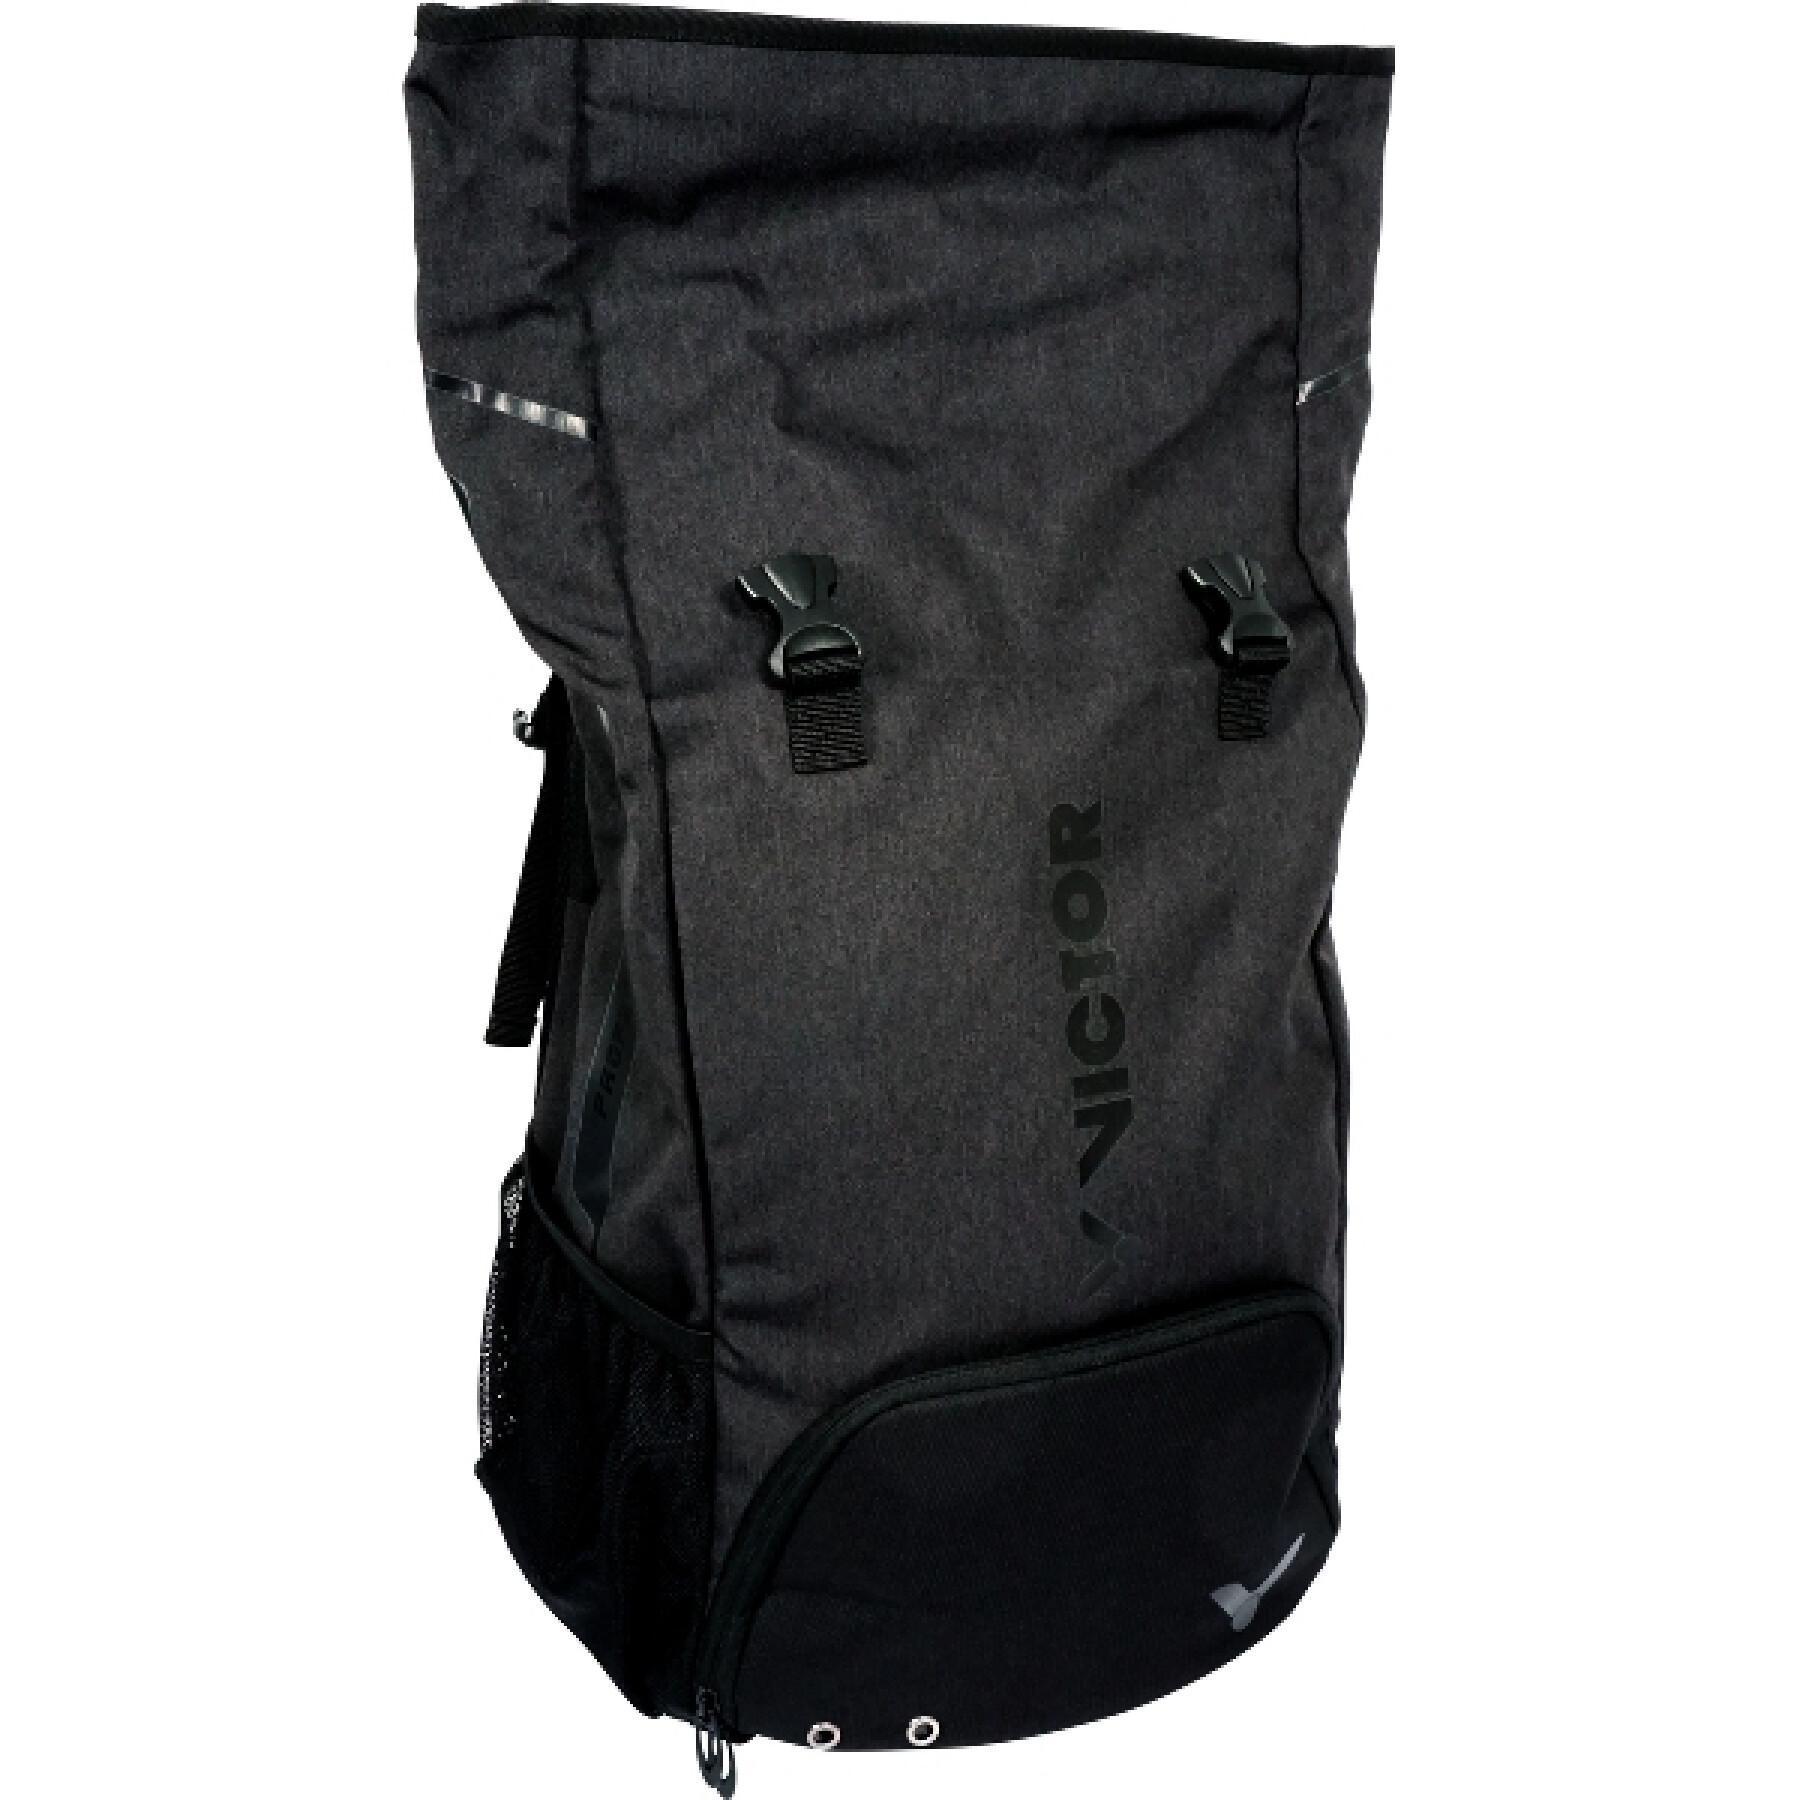 Backpack Victor 9101